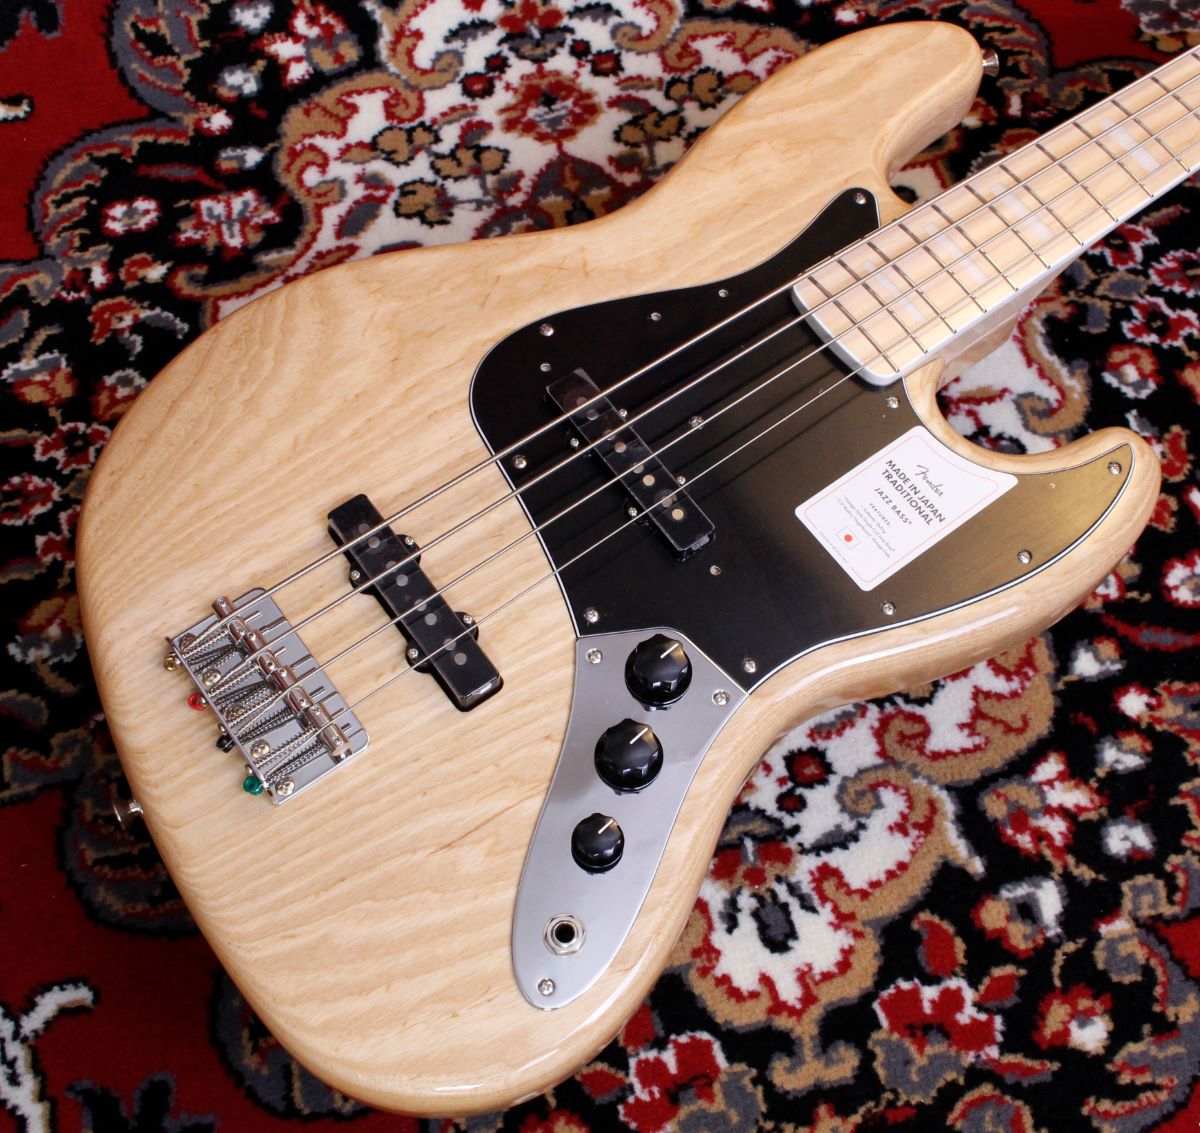 Fender Made in Japan Traditional 70s Jazz Bass Maple Fingerboard Natural  エレキベース ジャズベース フェンダー 【 札幌パルコ店 】